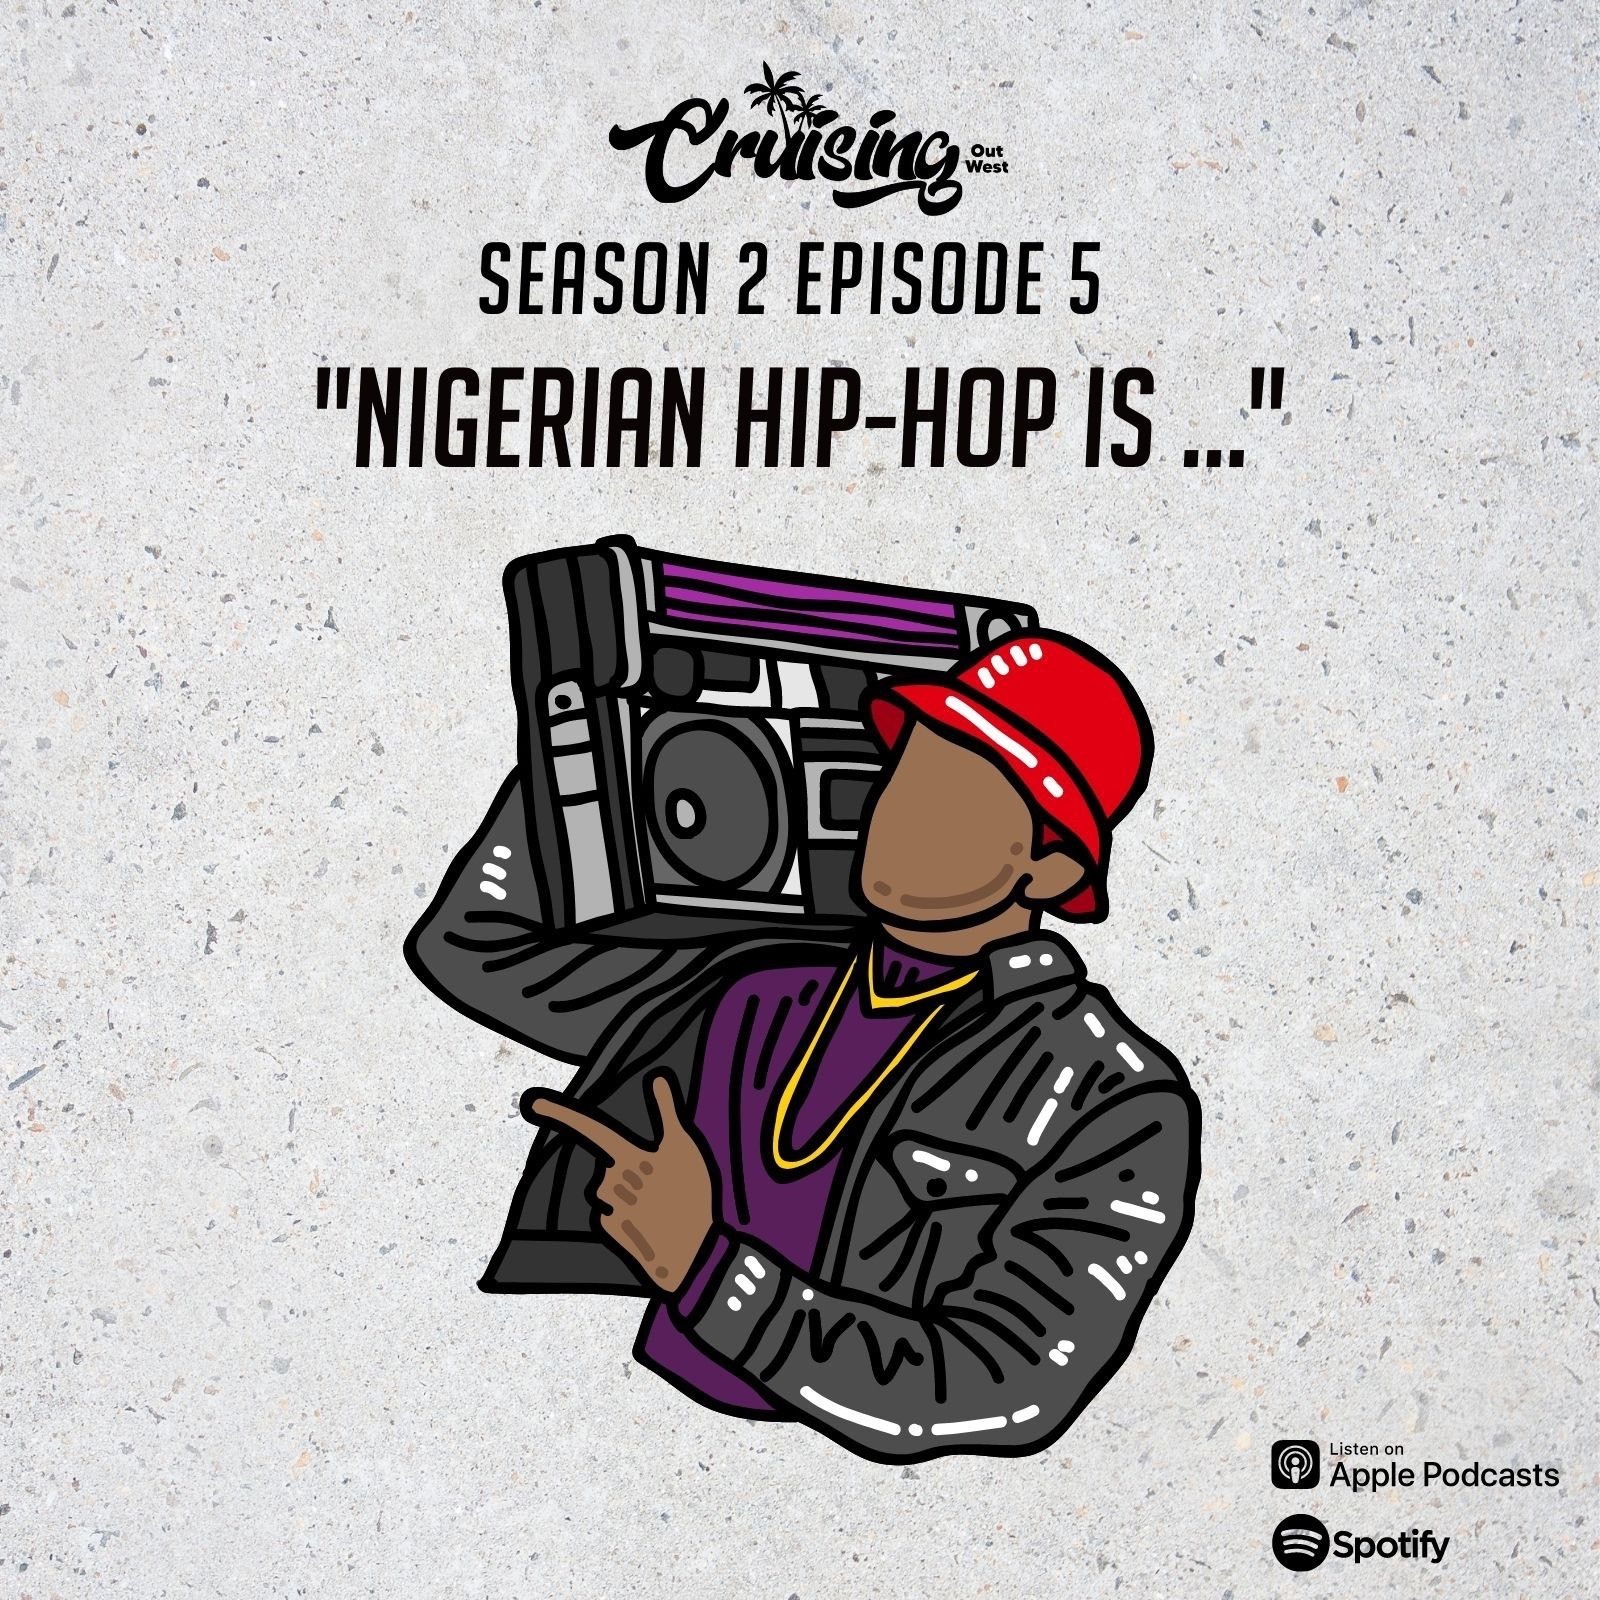 S2E5: "Nigerian Hip-Hop is ...."